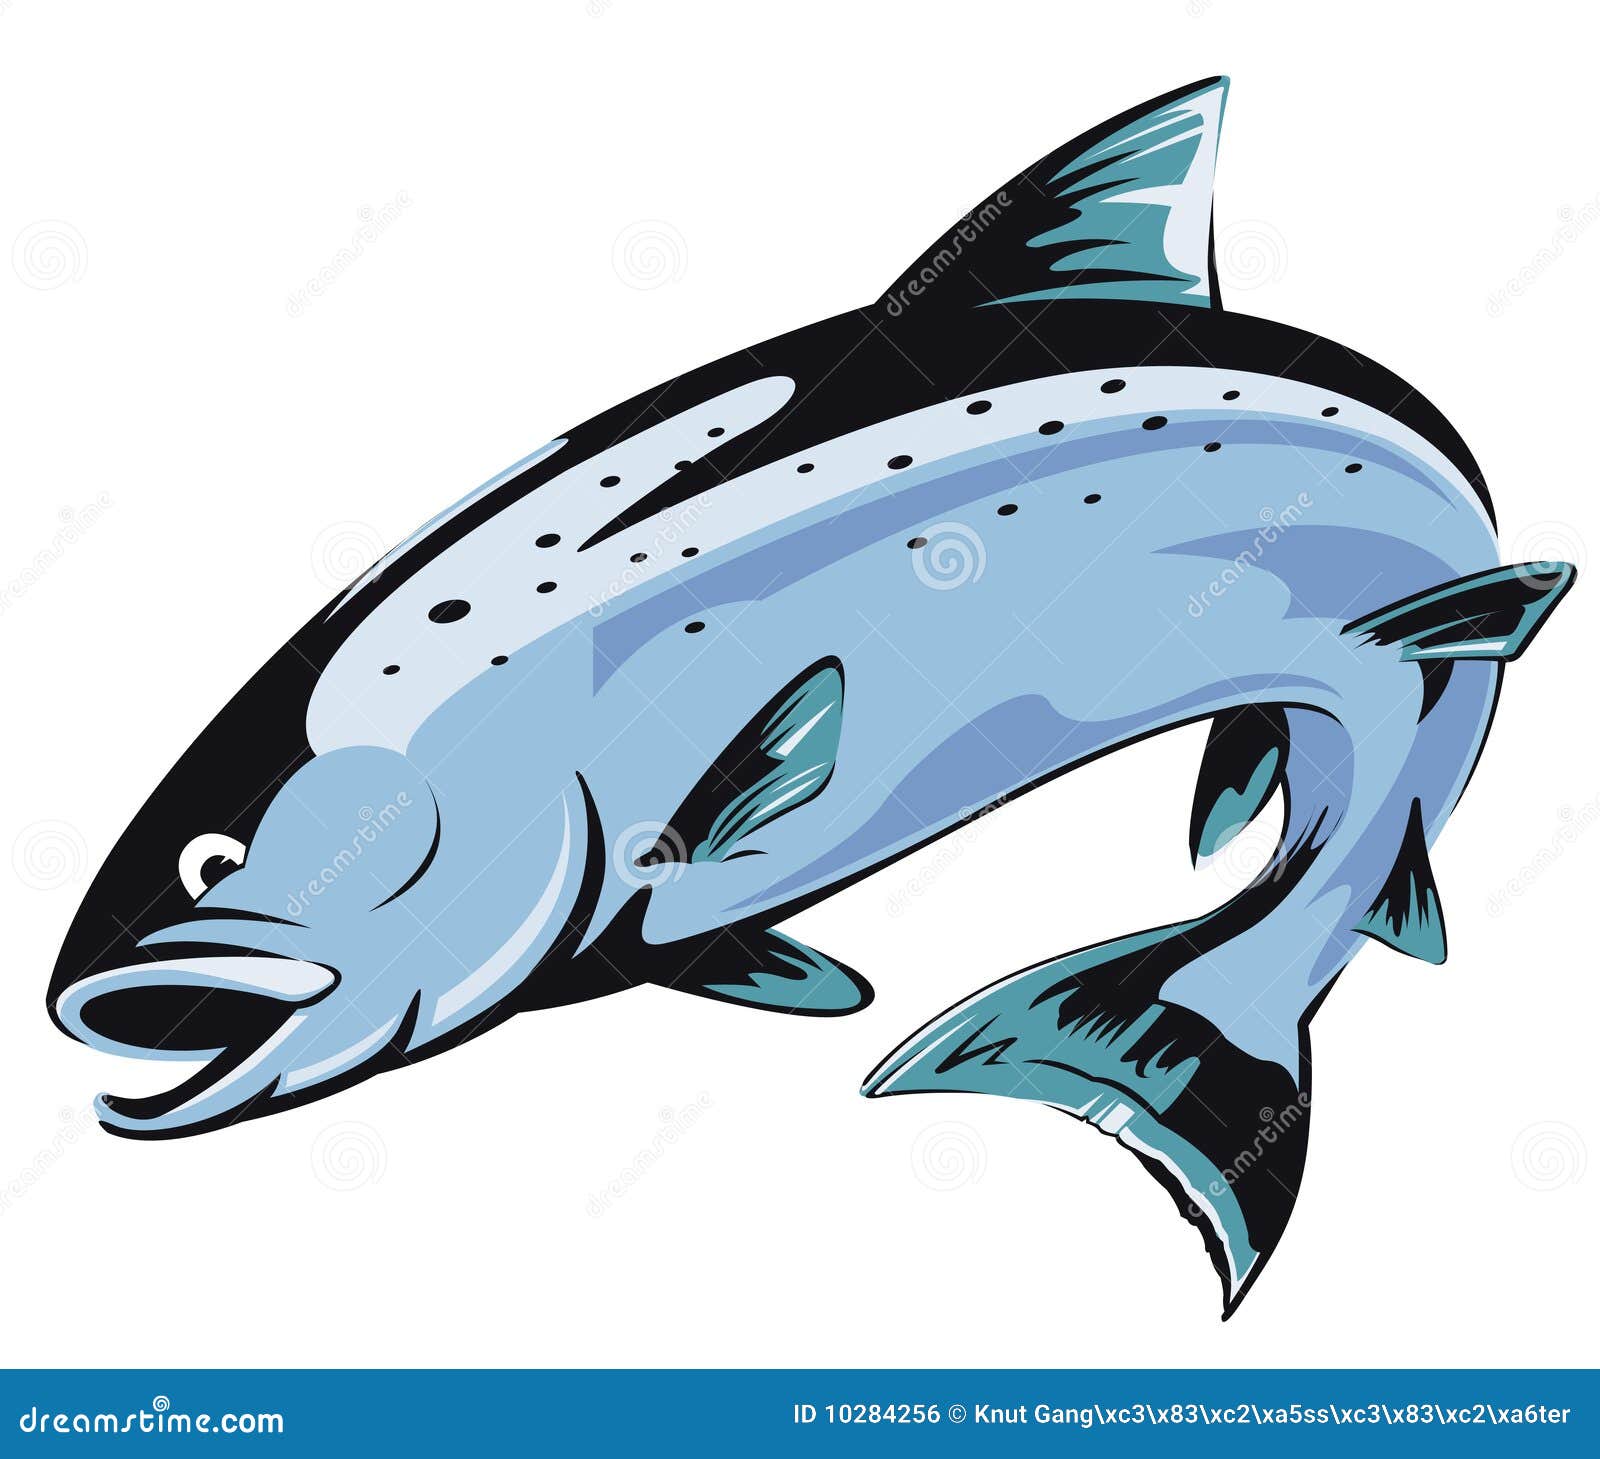 salmon fish clip art free - photo #15